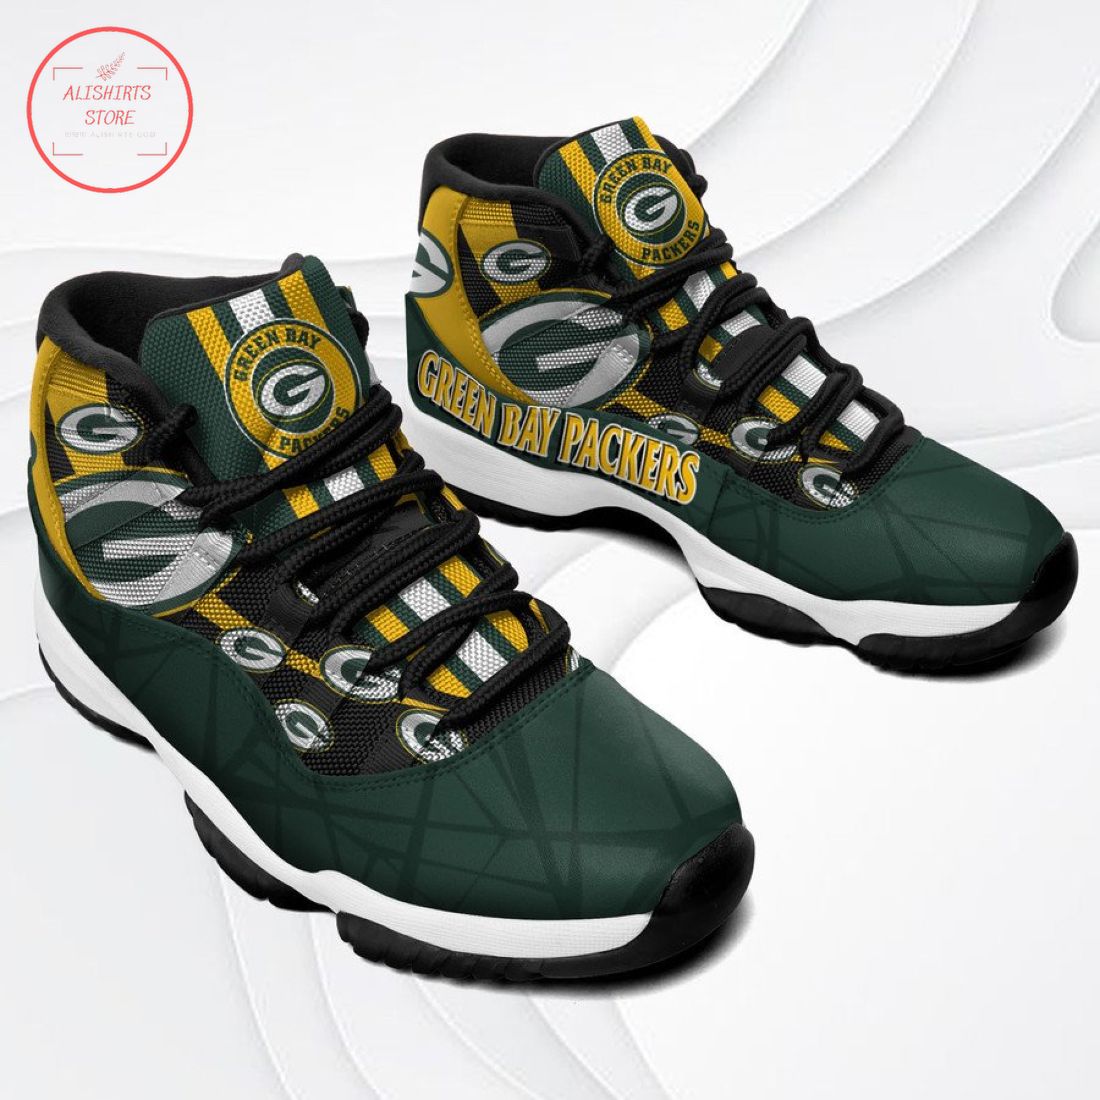 NFL Green Bay Packers New Air Jordan 11 Sneakers Shoes